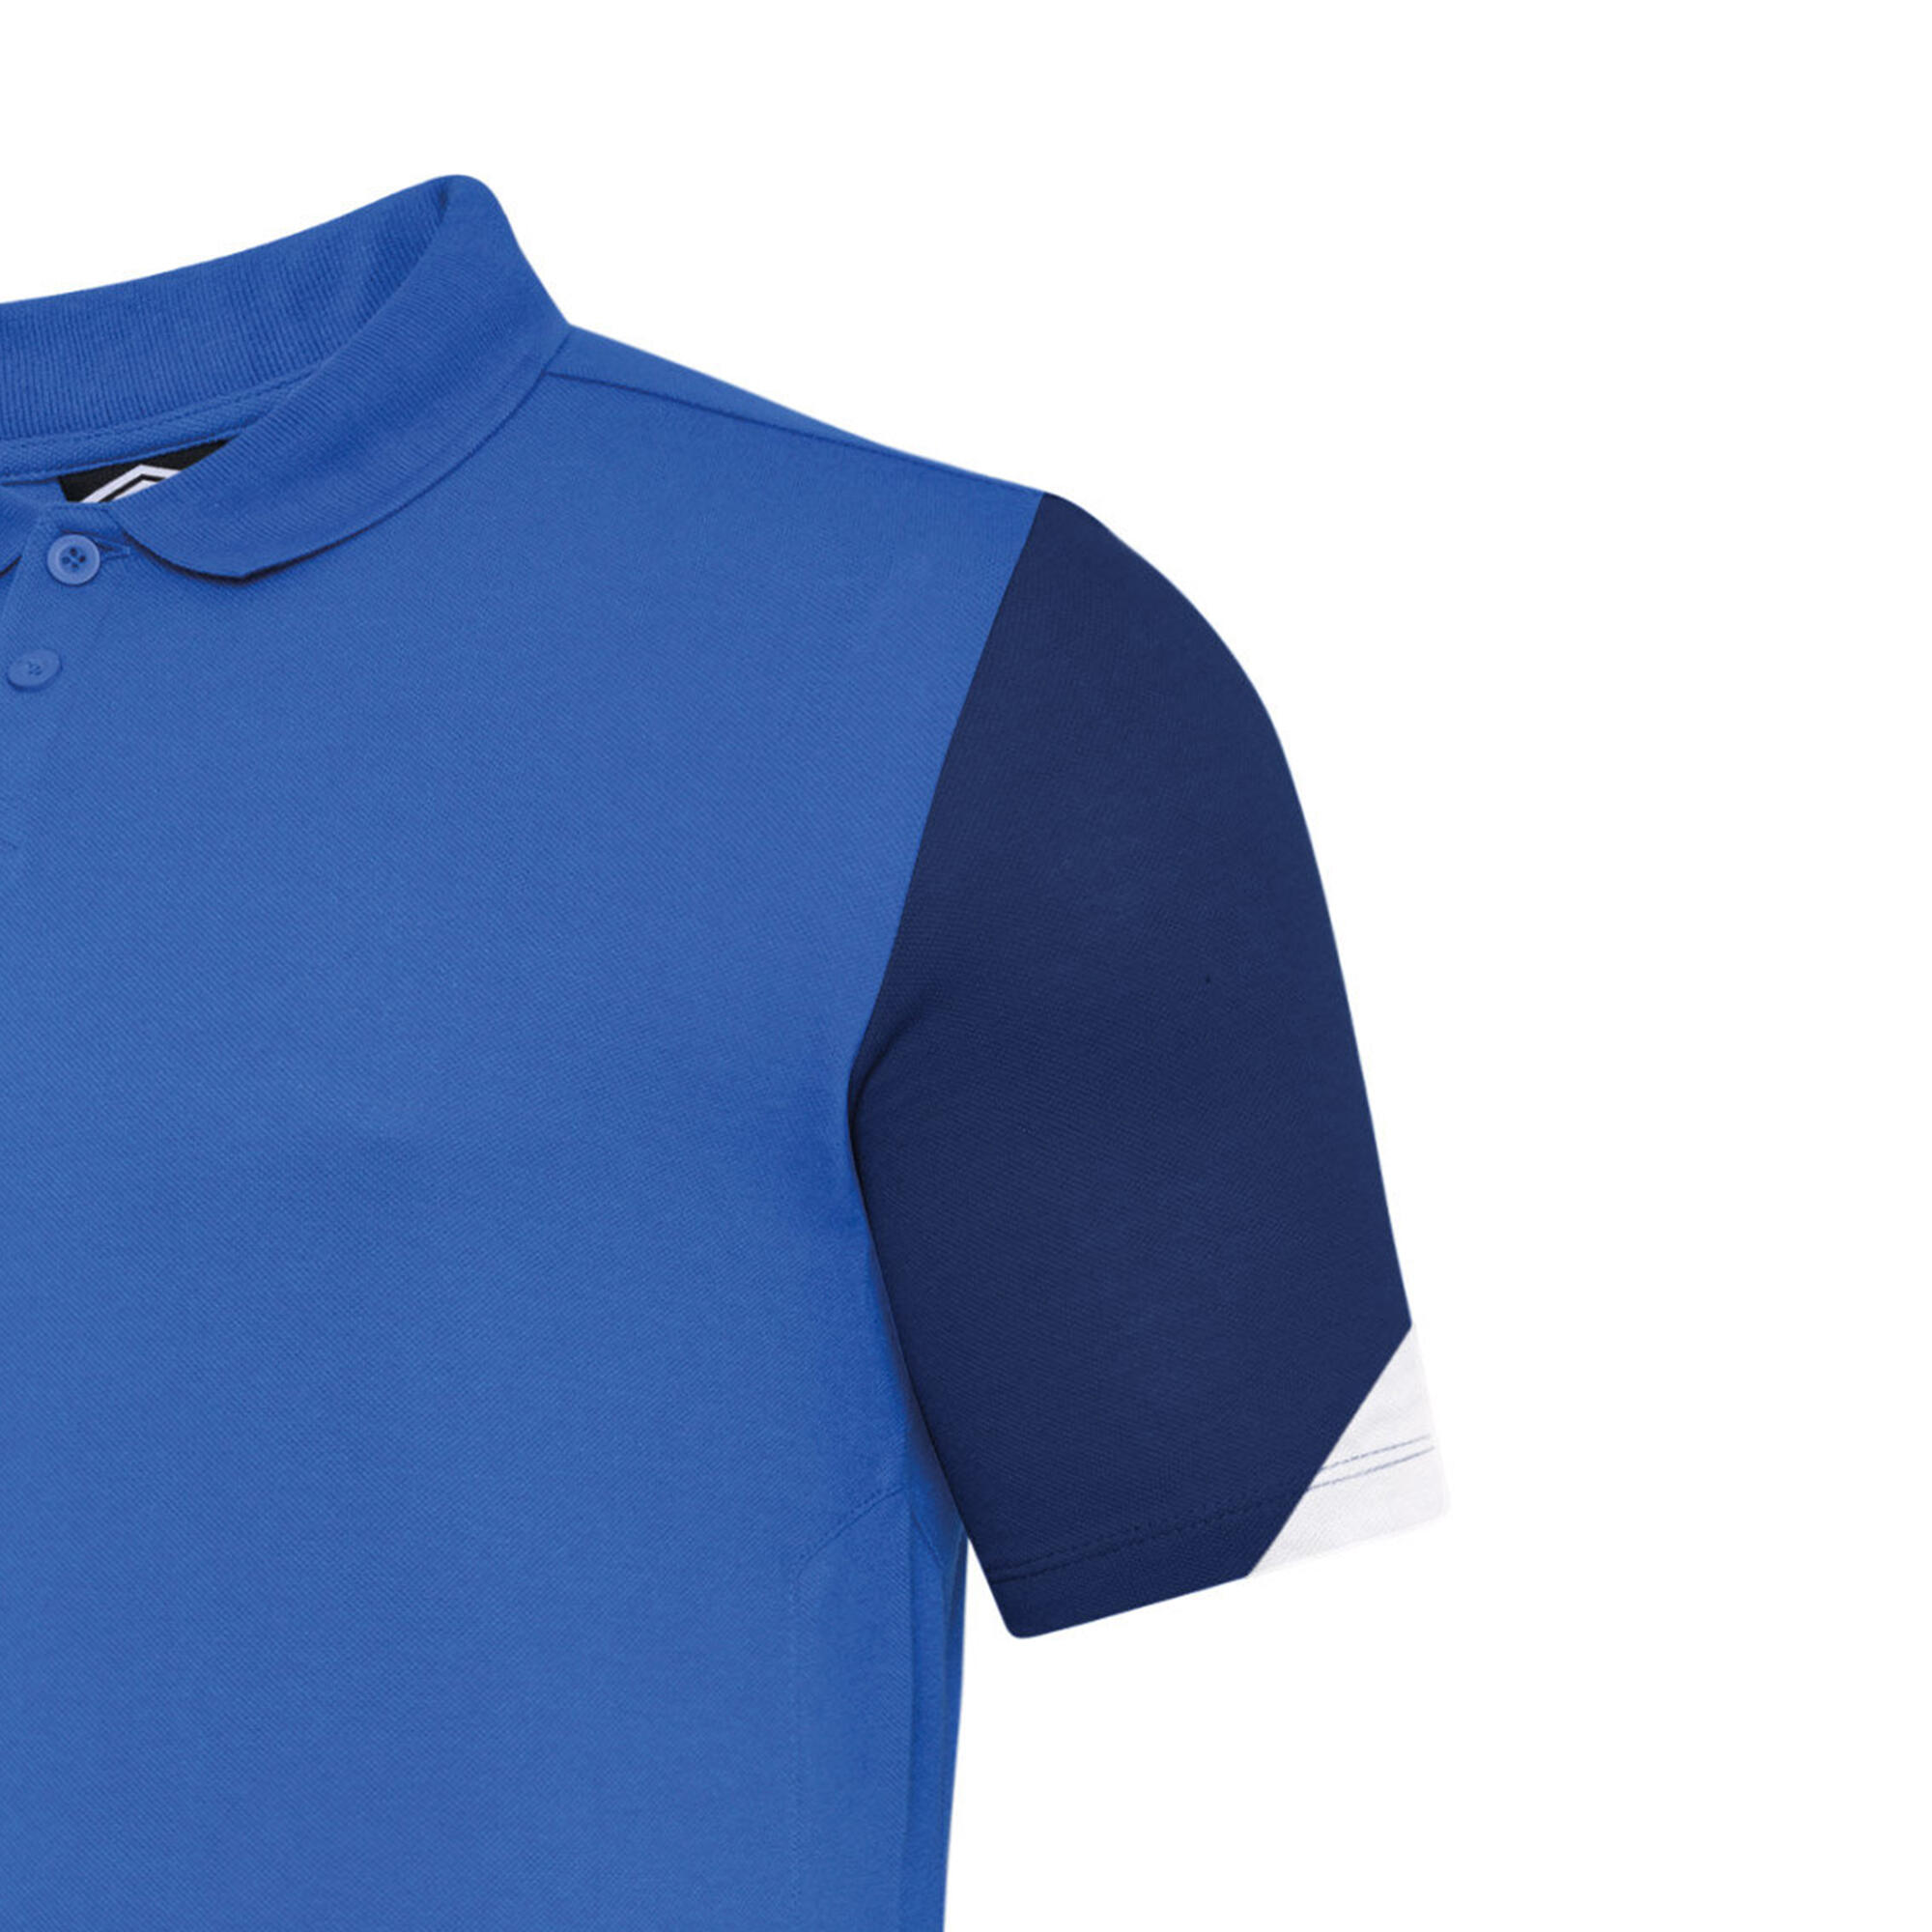 Mens Total Training Polo Shirt (Royal Blue/Dark Navy/White) 2/3